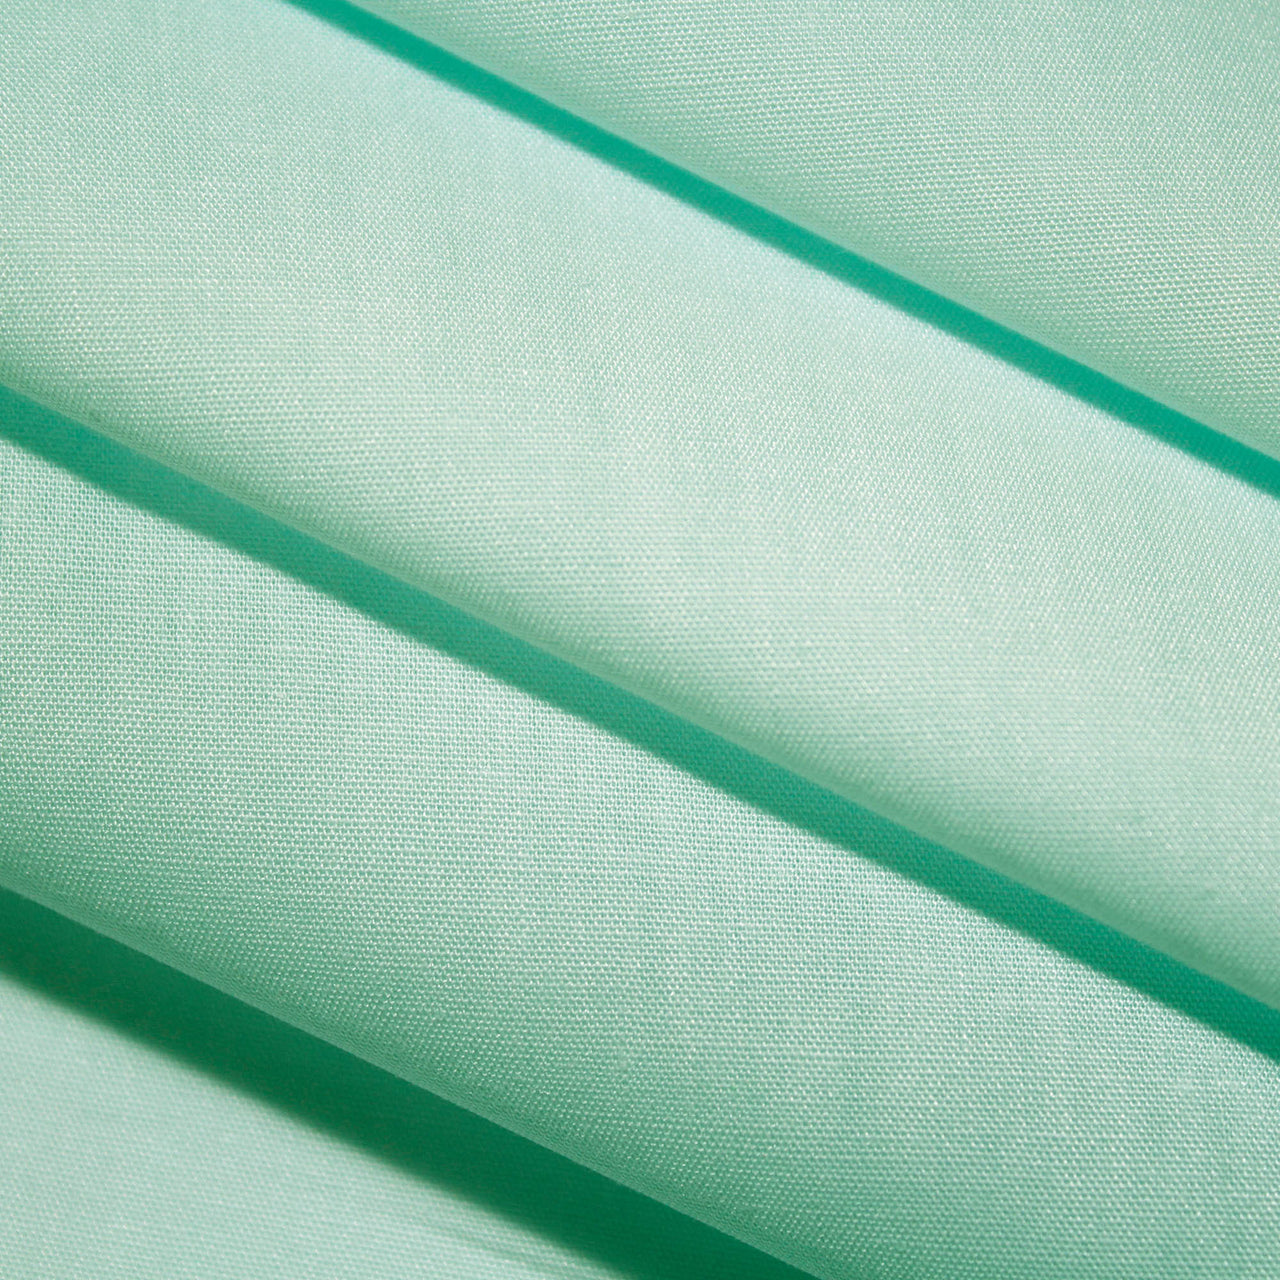 Mint Green - Superior Quality Plain Poly Cotton - Width 114cm